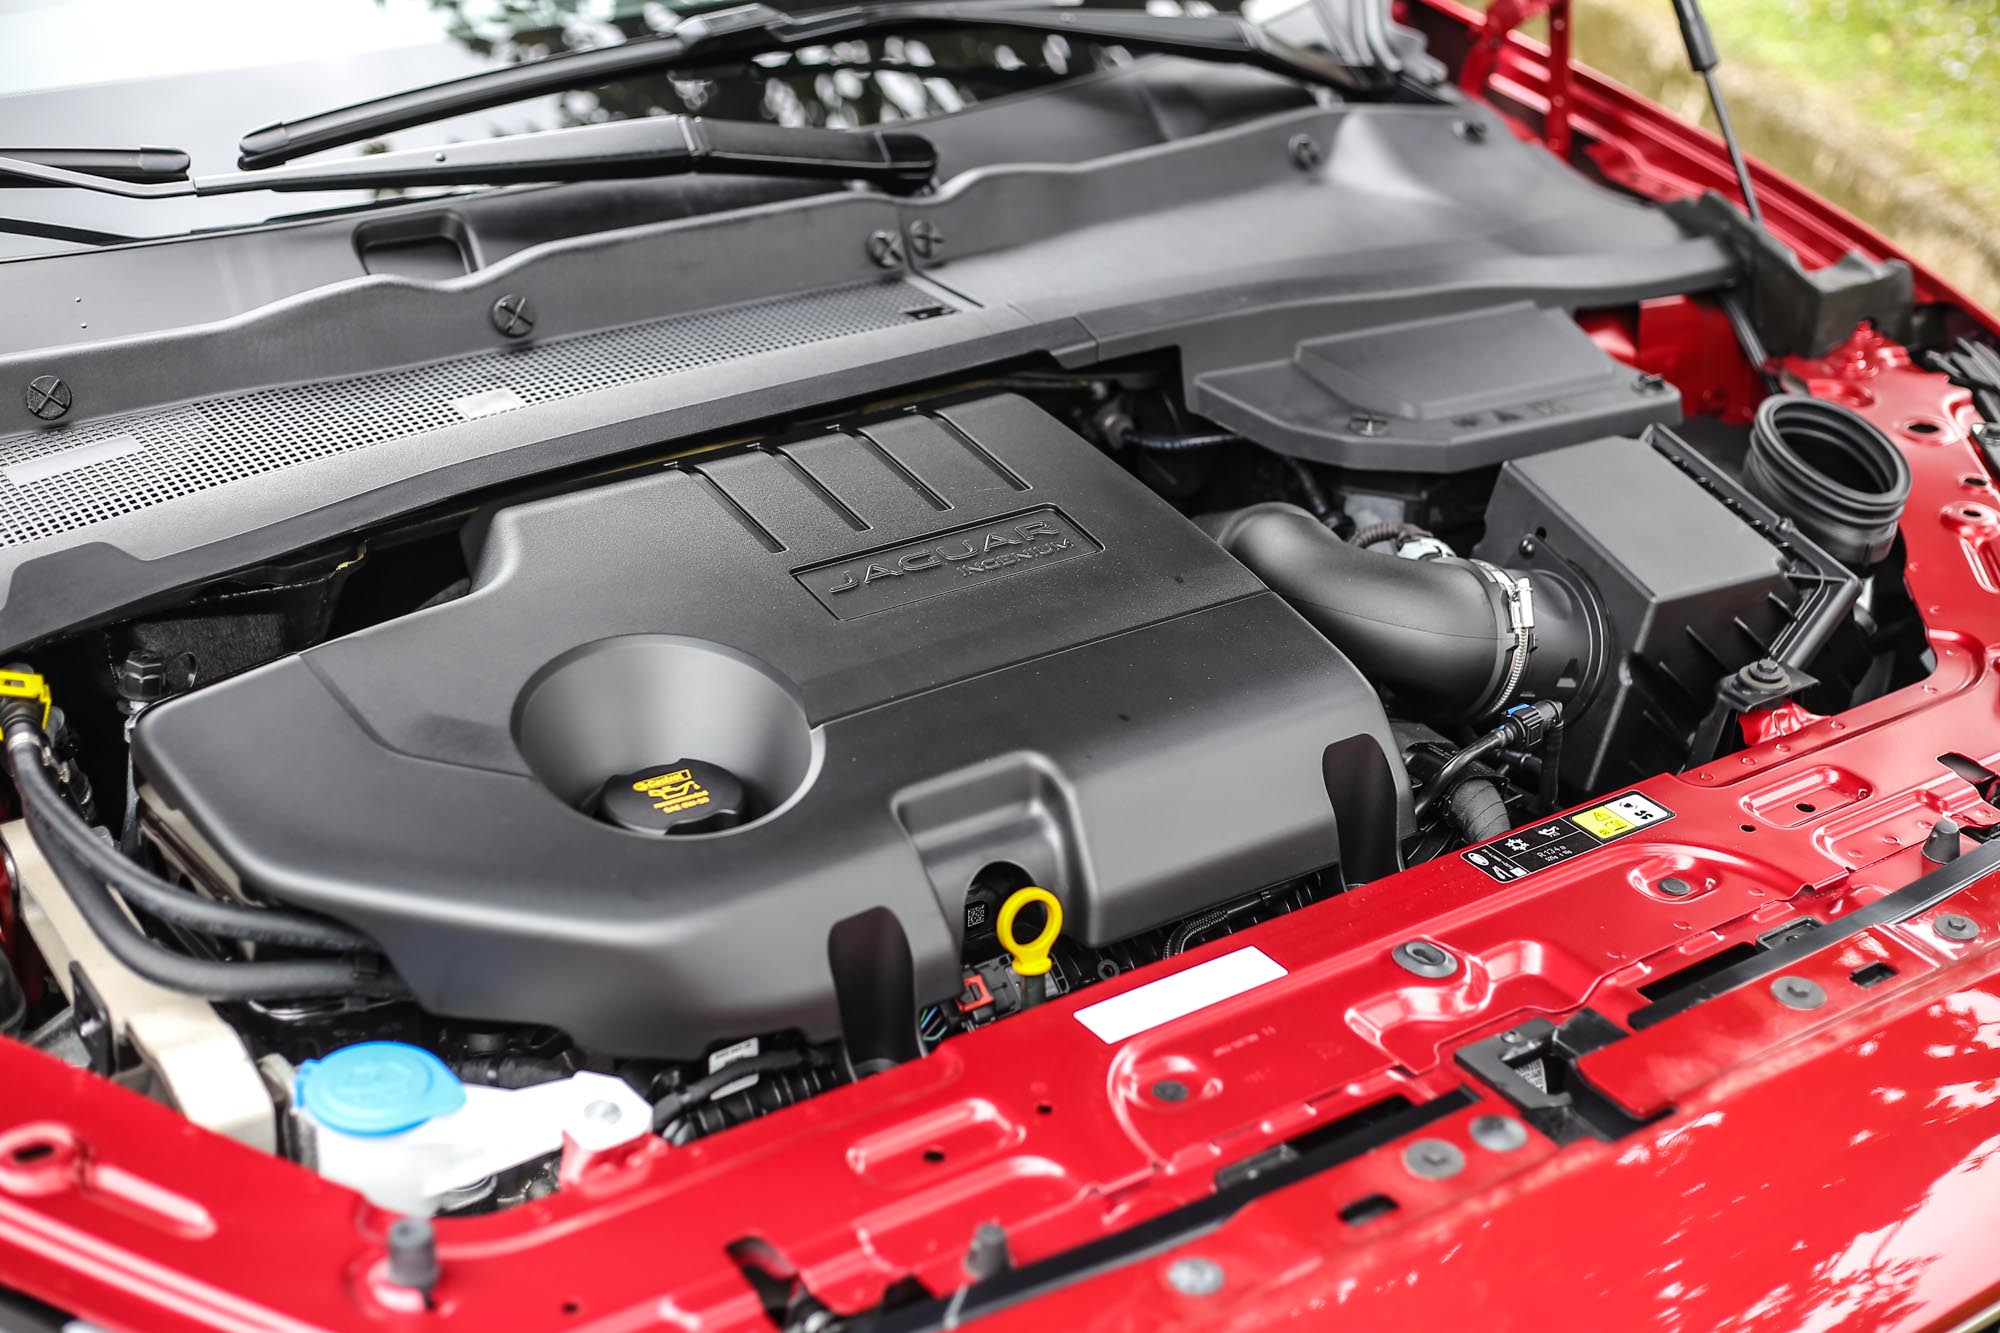 D150車型搭載2.0升柴油引擎，具備150ps/3500rpm最大馬力與380kgm/1750rpm最大扭力輸出。